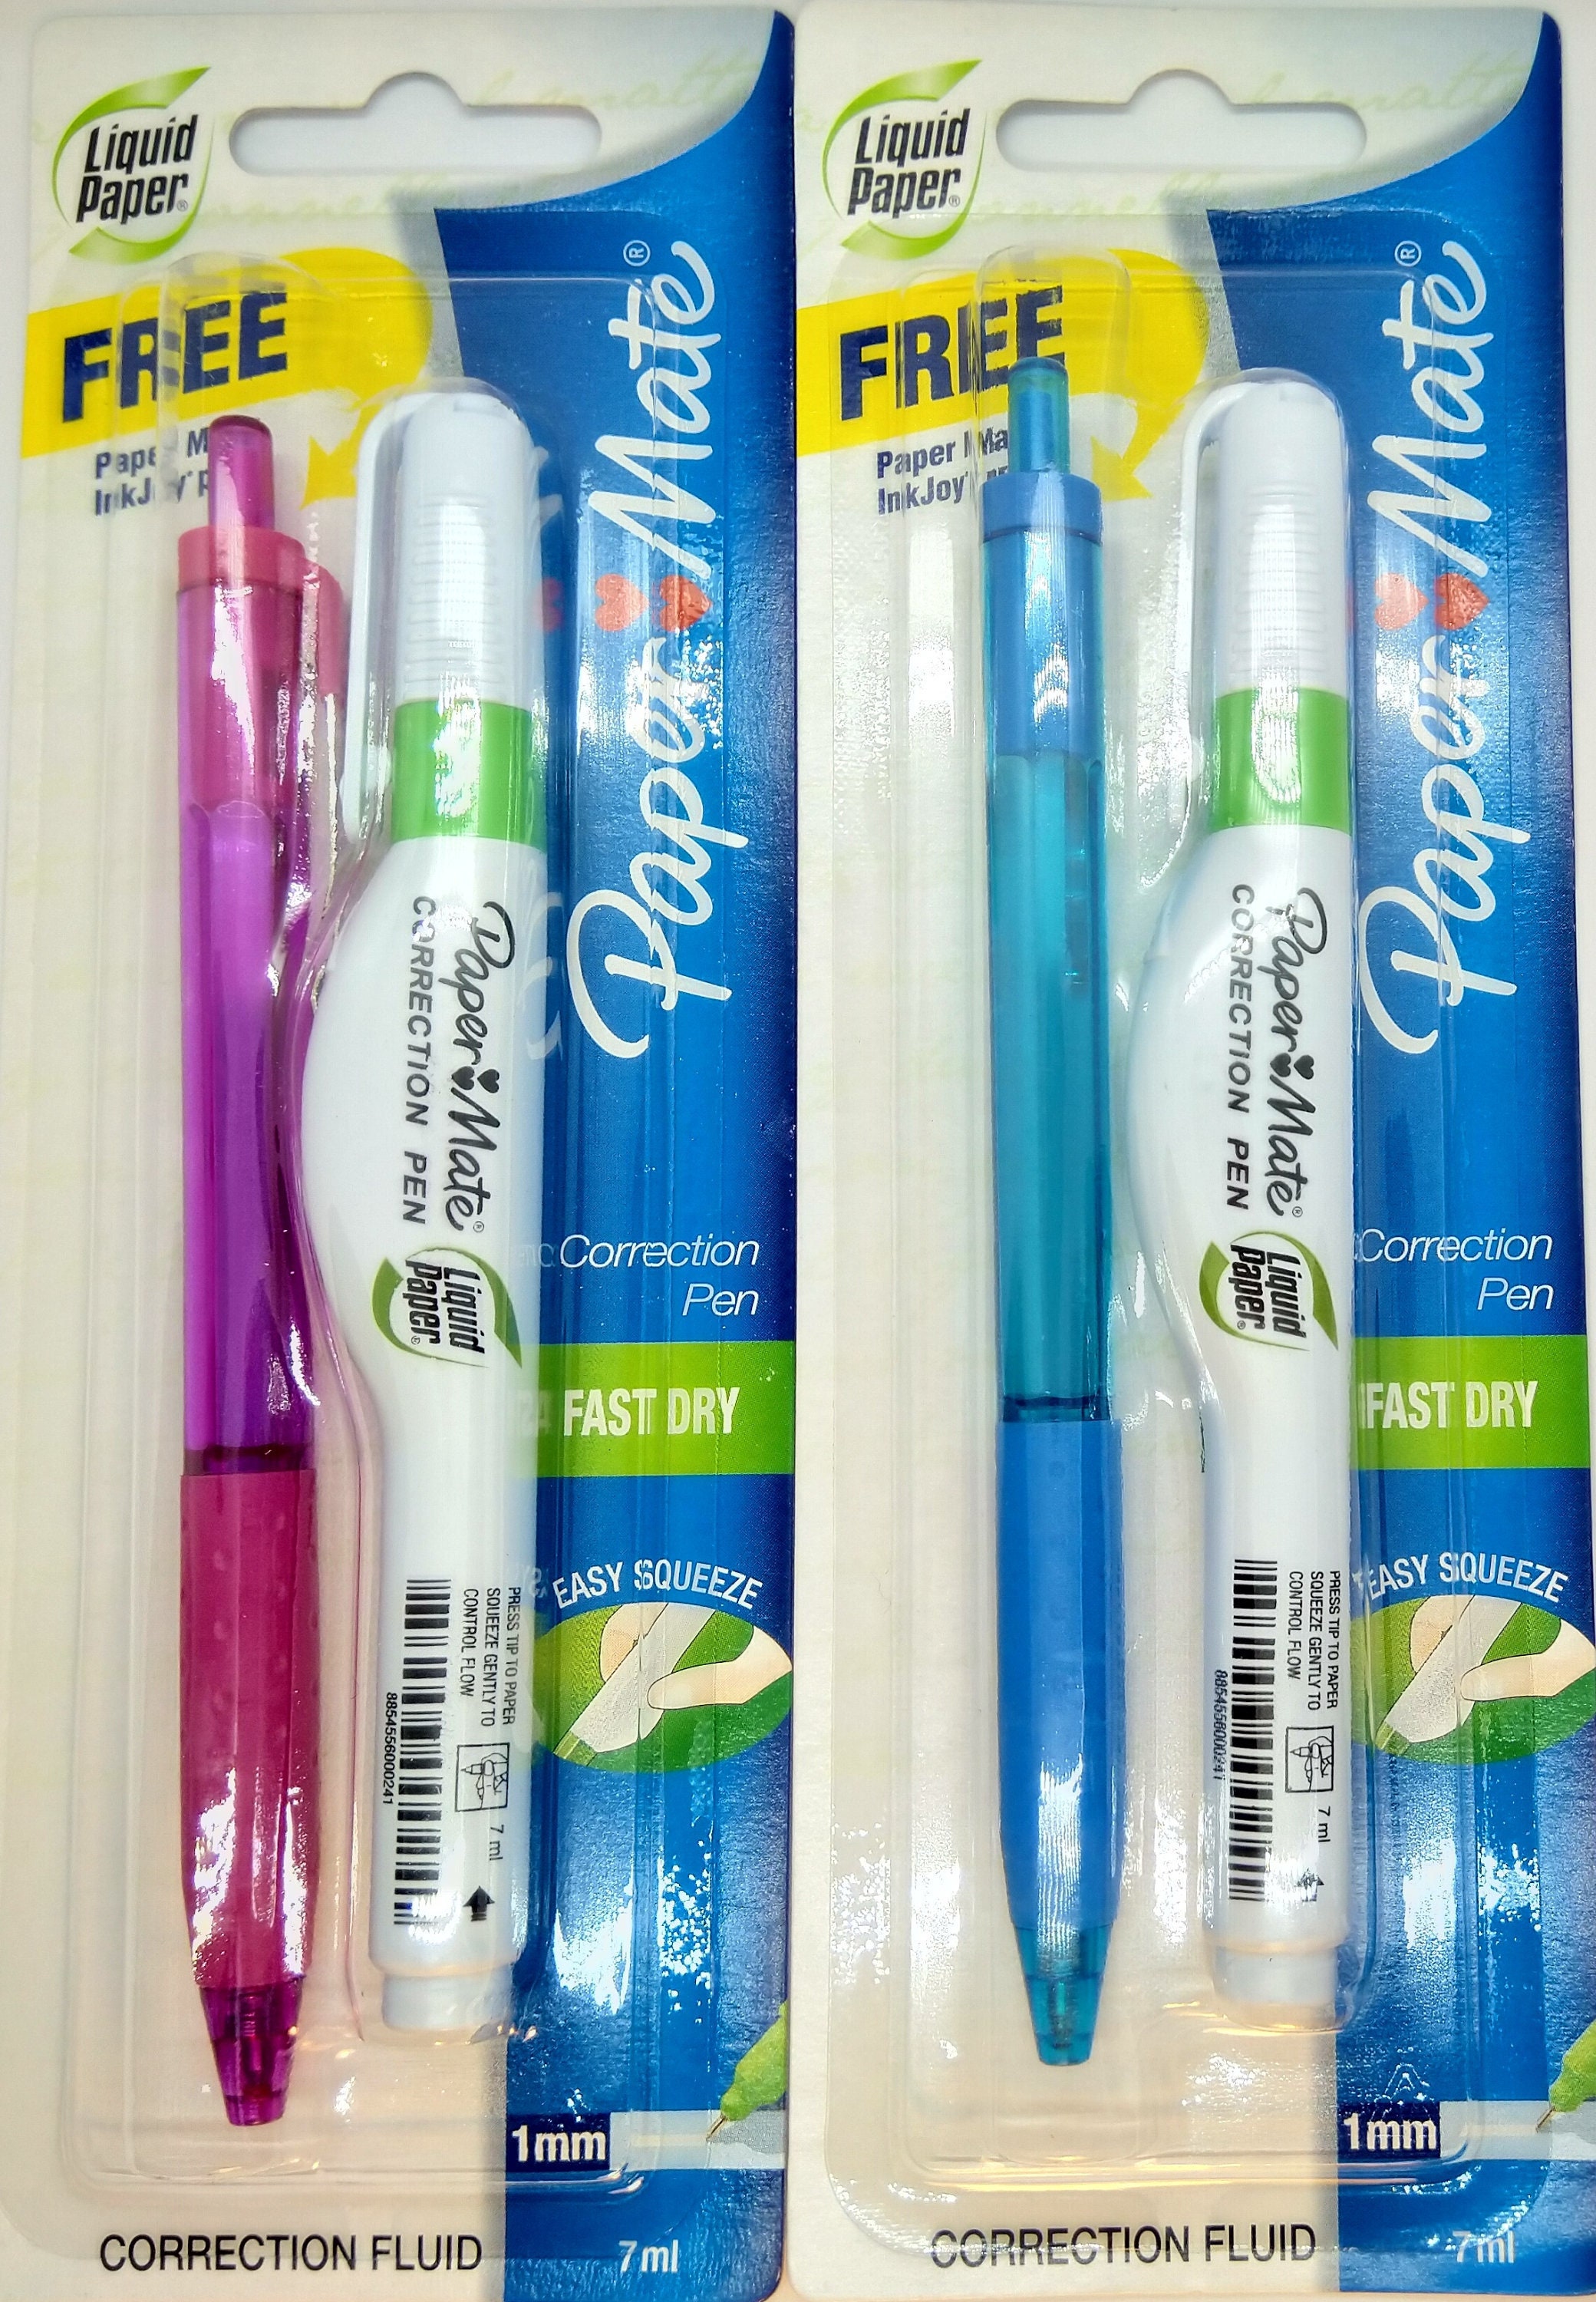 Paper Mate Flair Olive Ultra Fine 0.4mm Felt Pens Pack of 3 